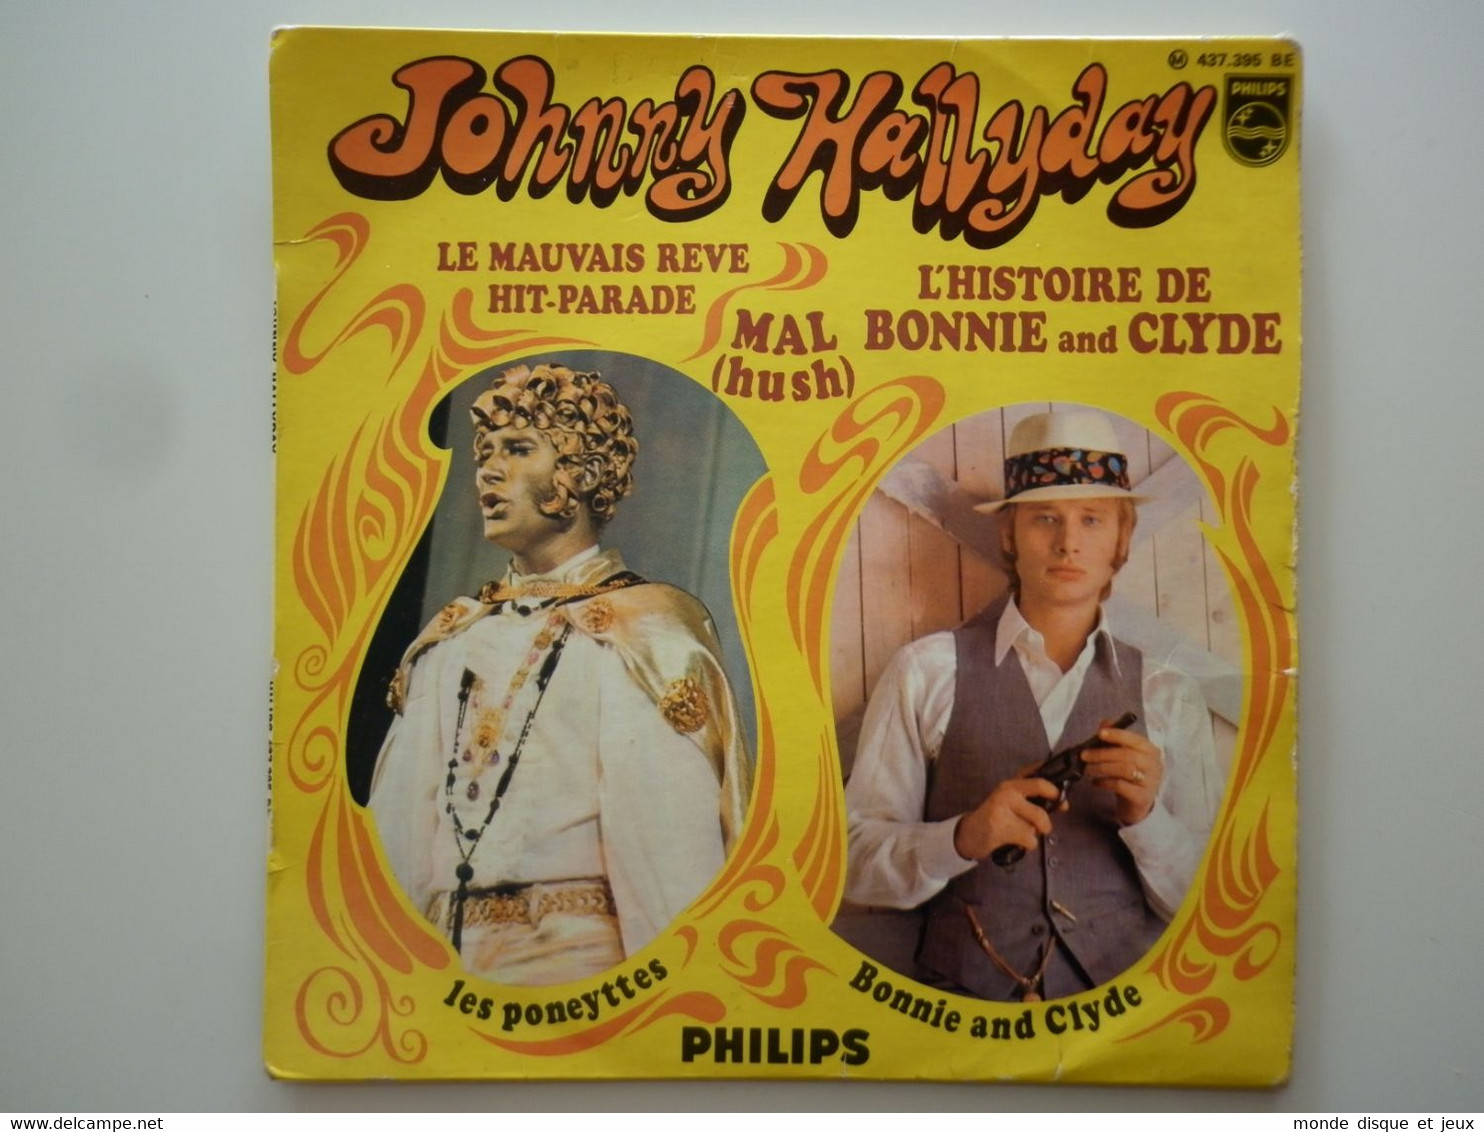 Johnny Hallyday 45Tours EP Vinyle Le Mauvais Rêve / Bonnie And Clyde - 45 T - Maxi-Single